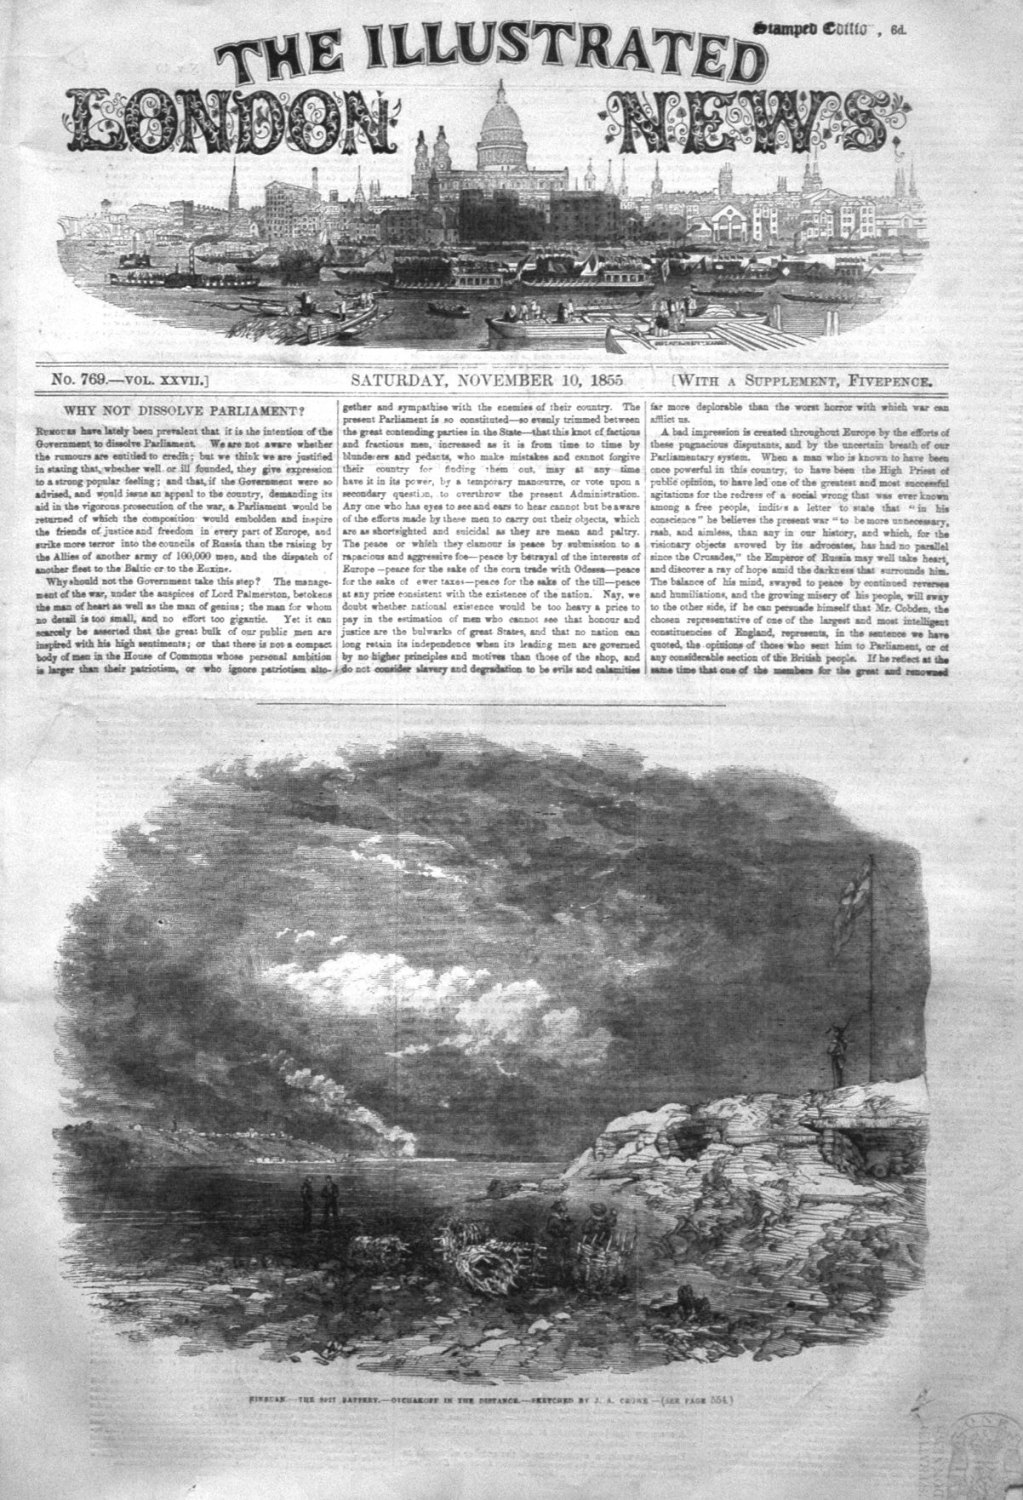 Illustrated London News, November 10th 1855.